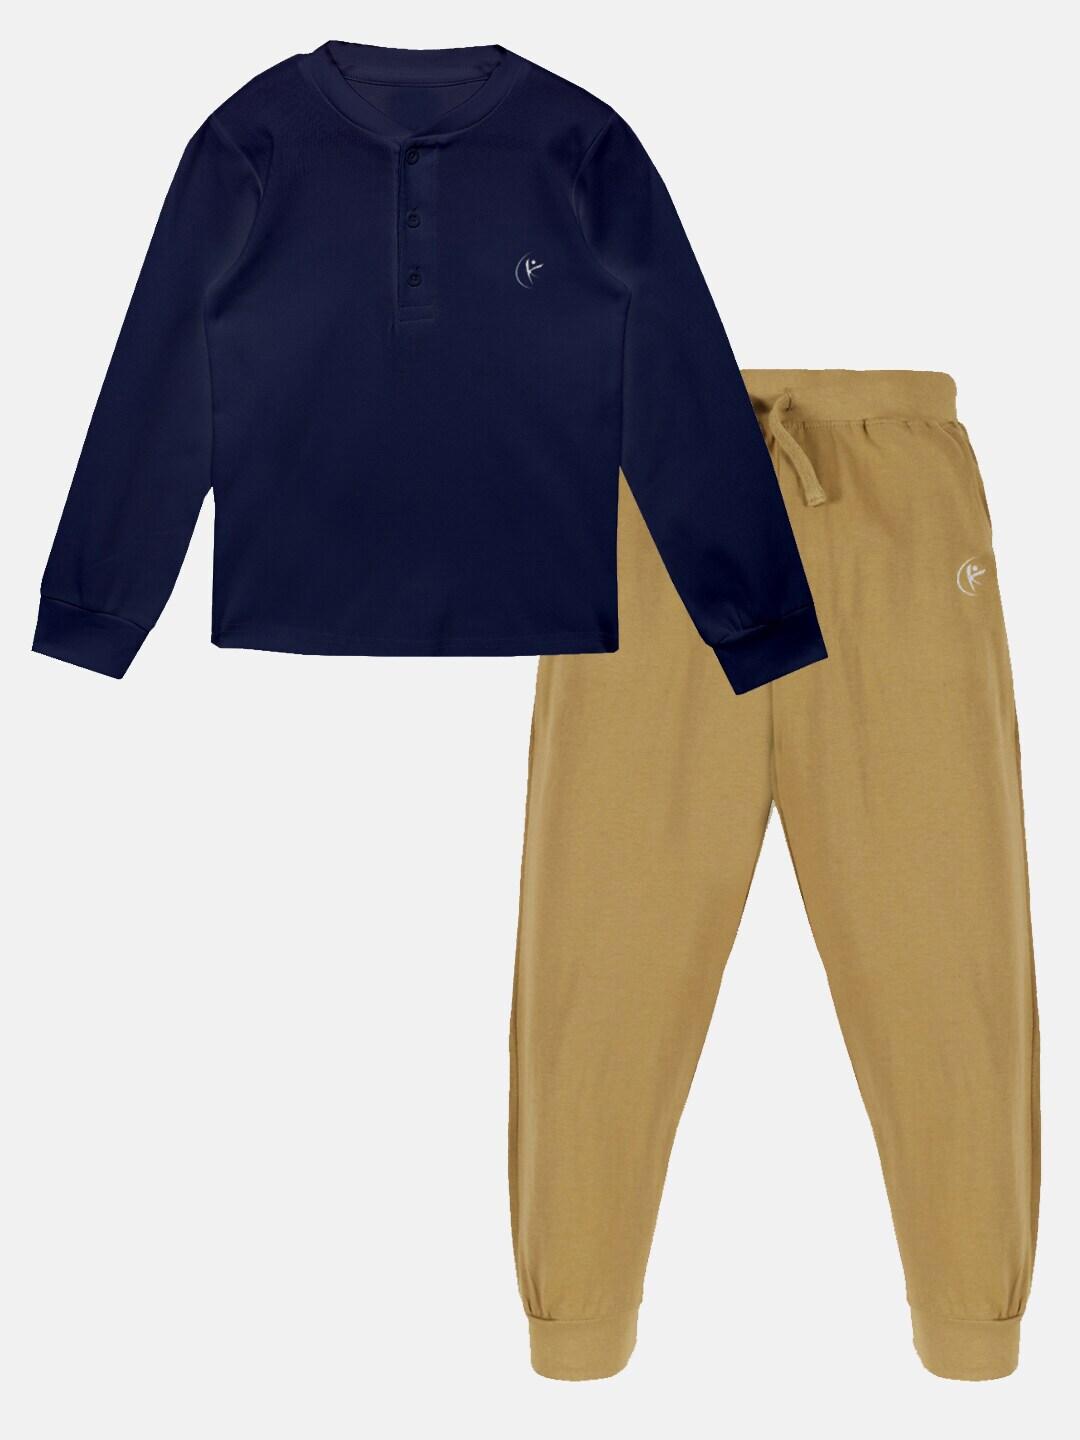 KiddoPanti Boys Navy Blue & Khaki T-shirt with Trousers